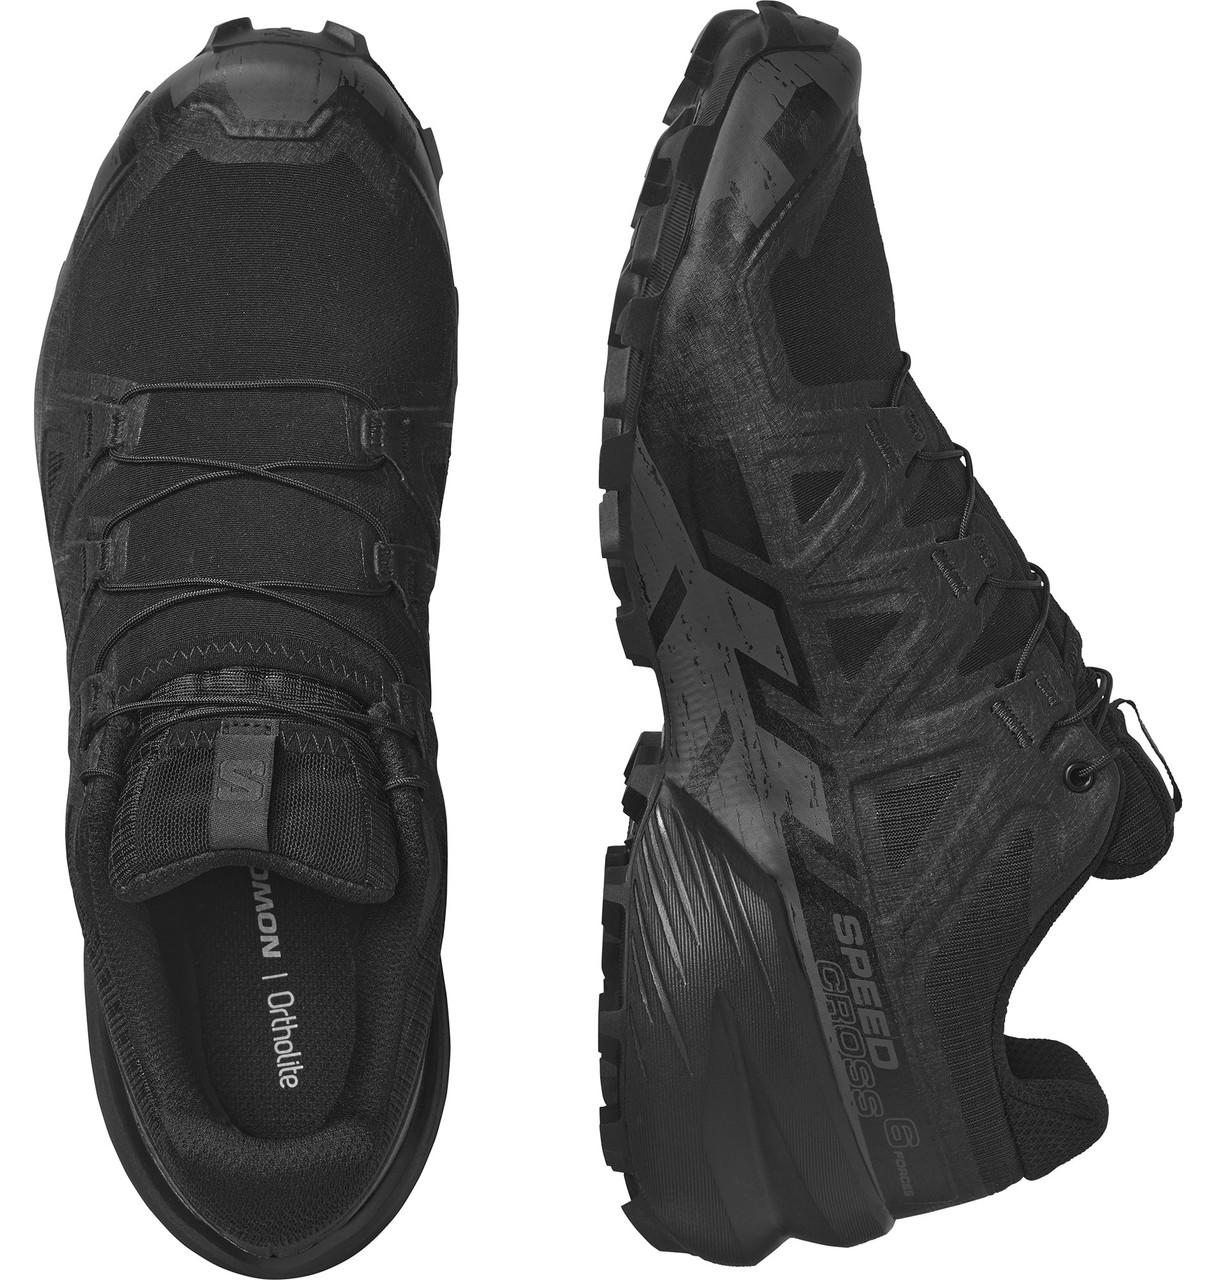 Zapatos Salomon Speedcross 6 L41738000 Quiet Shade/Black/Pearl Blue